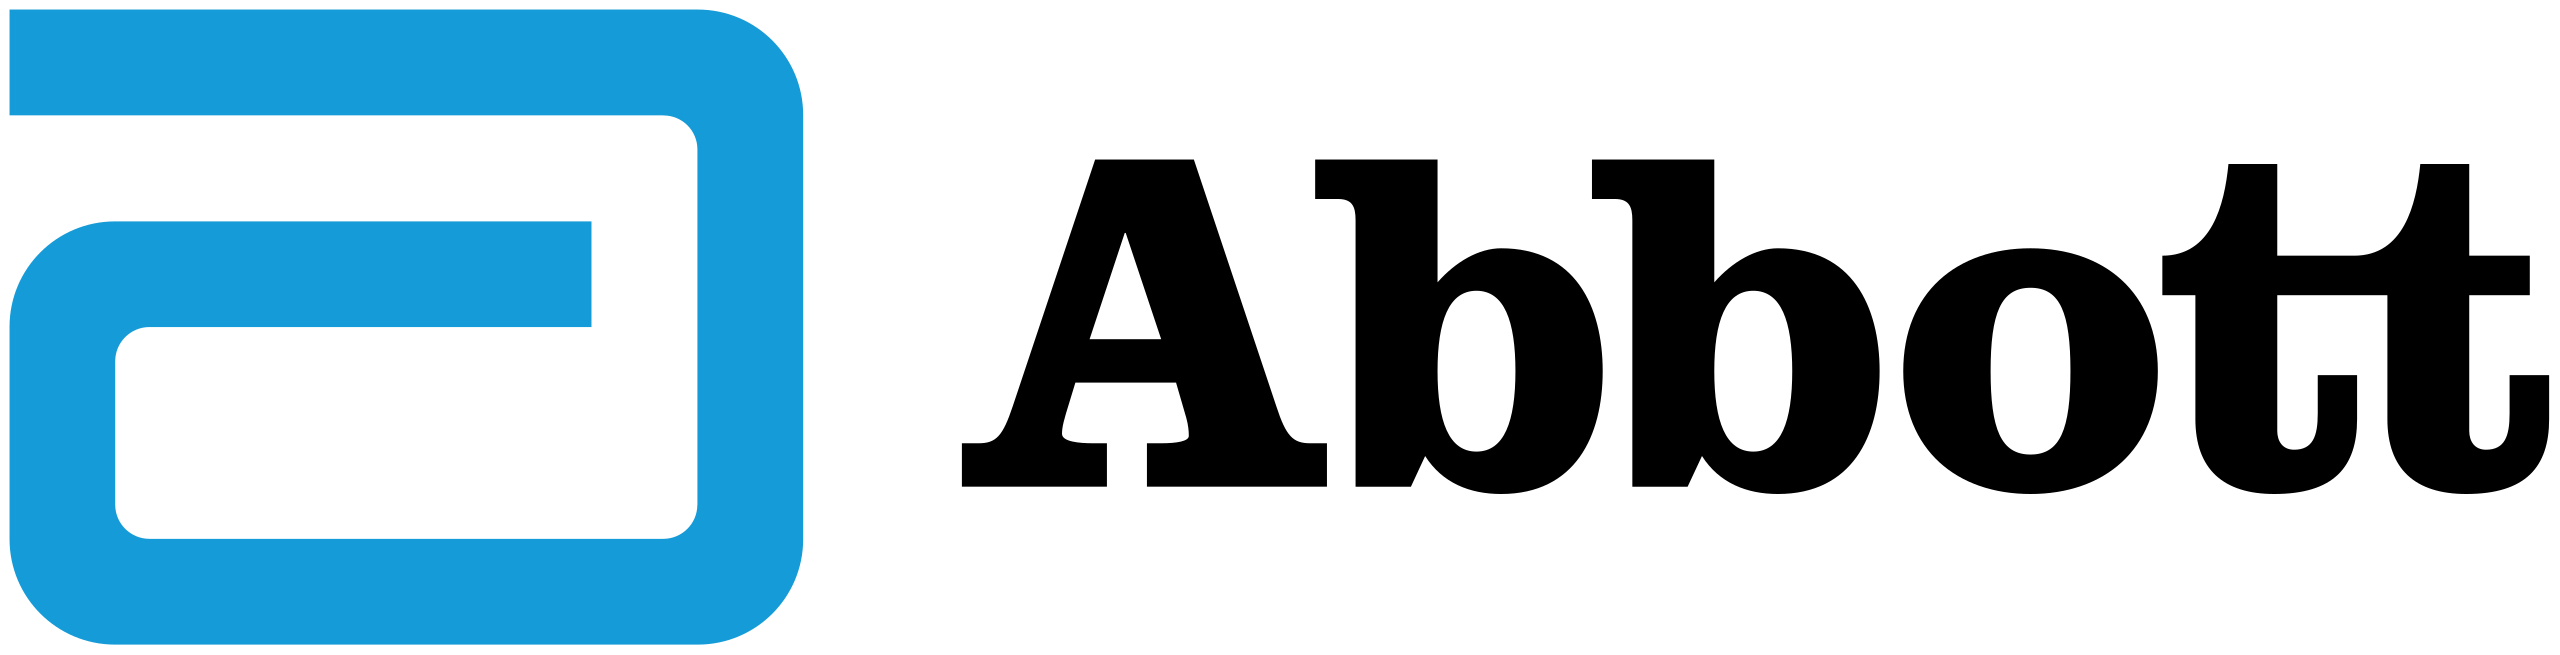 abbott logo image